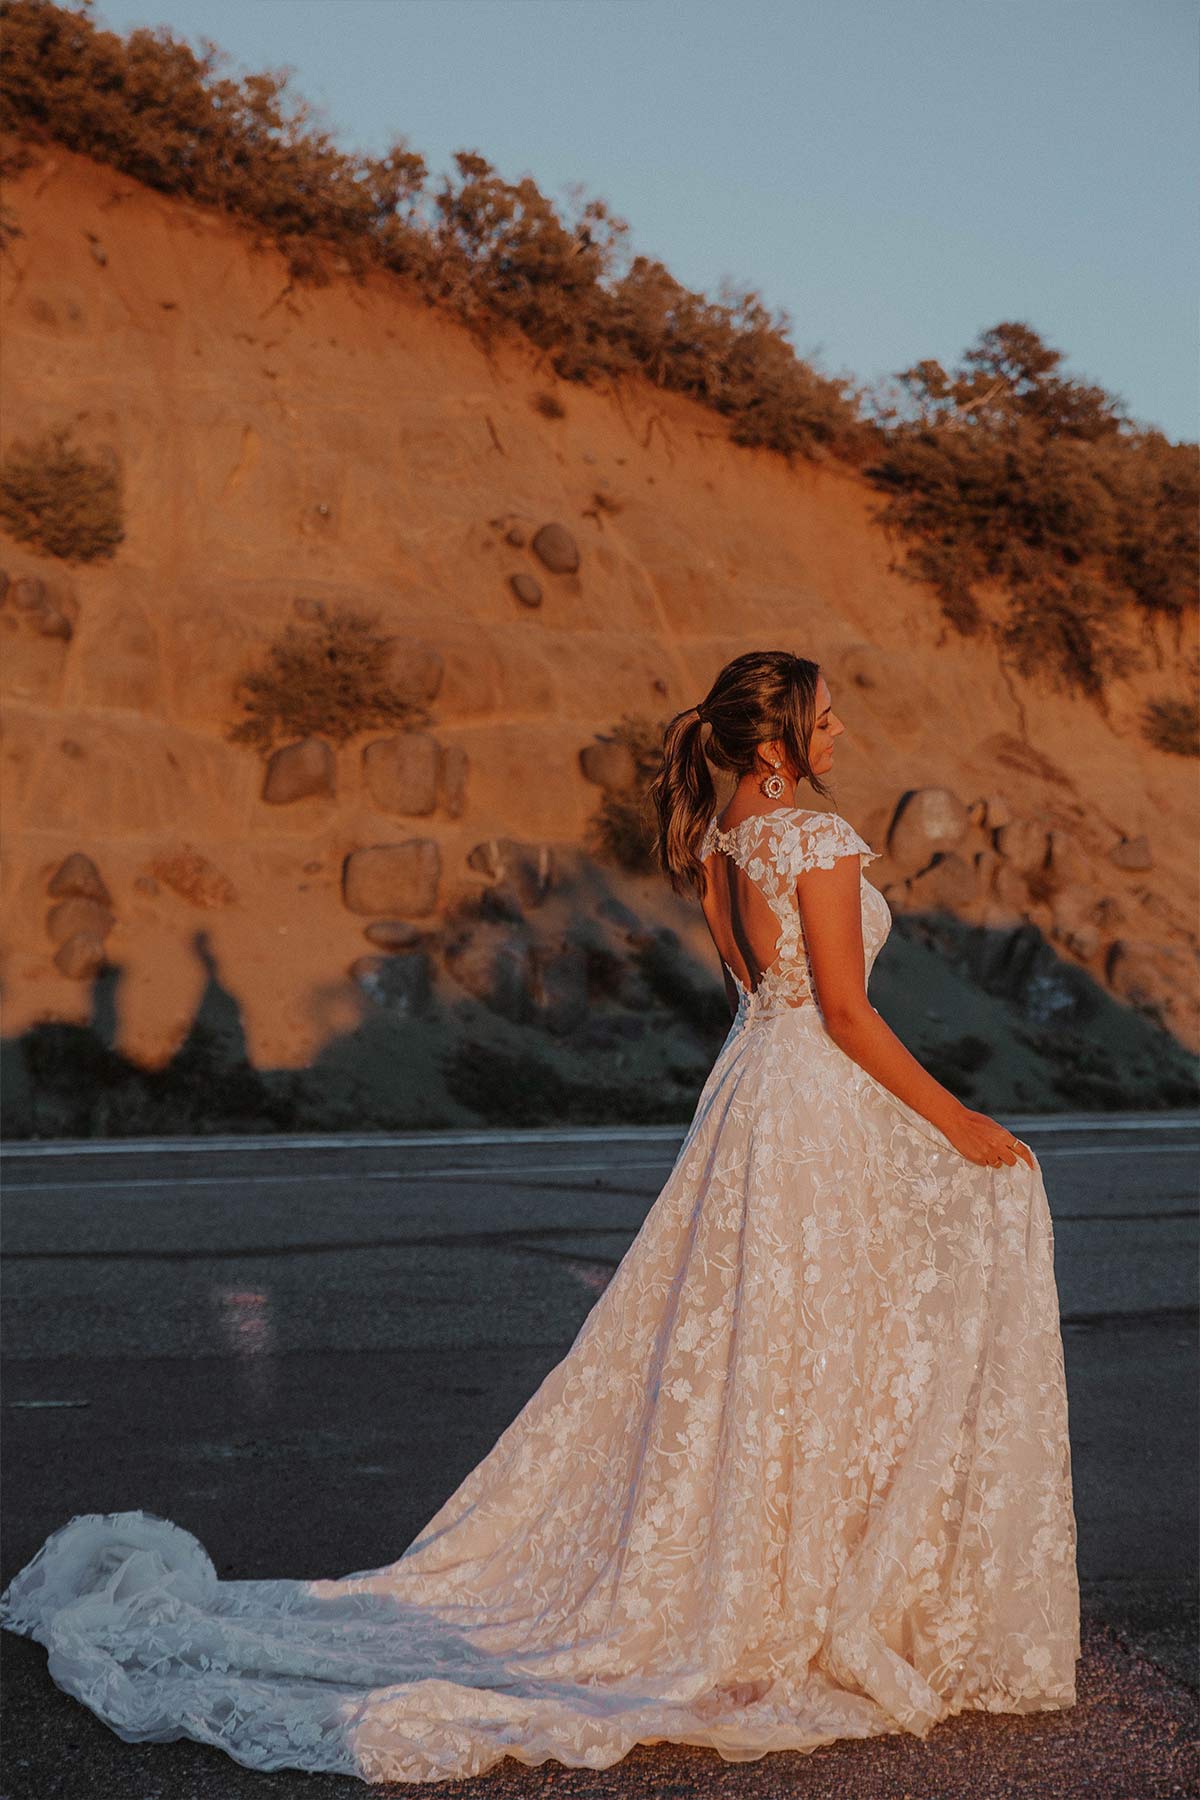 simple lace wedding dress